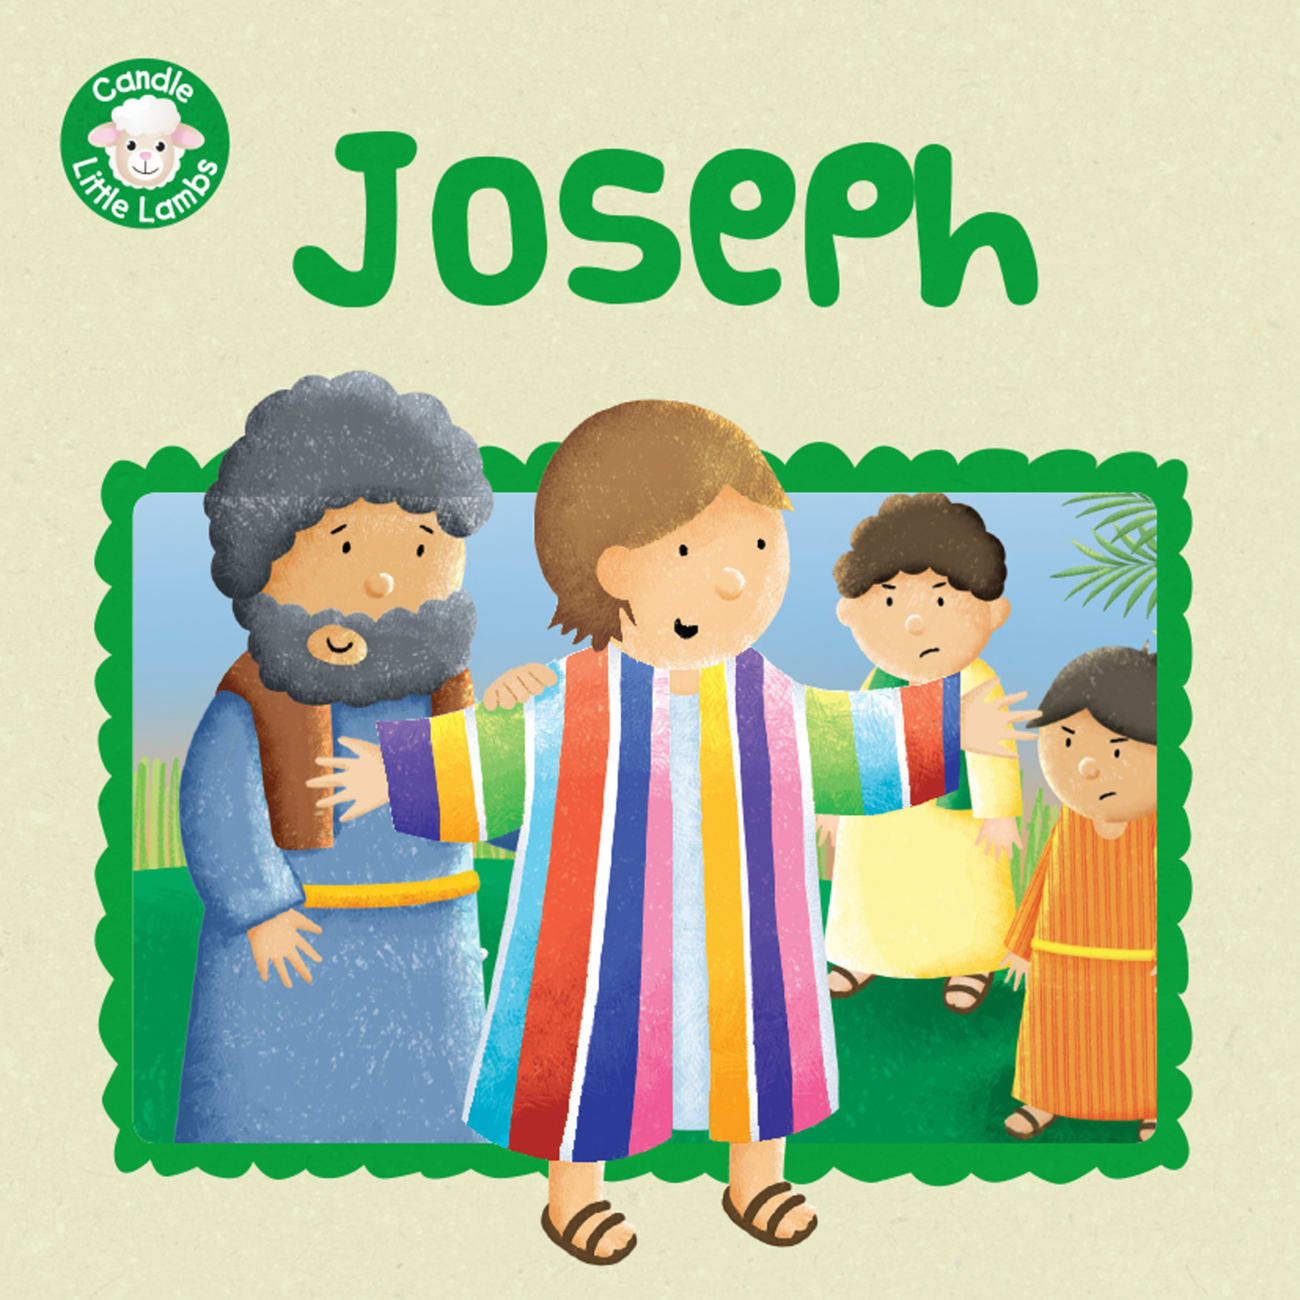 Joseph (Candle Little Lamb Series) Paperback